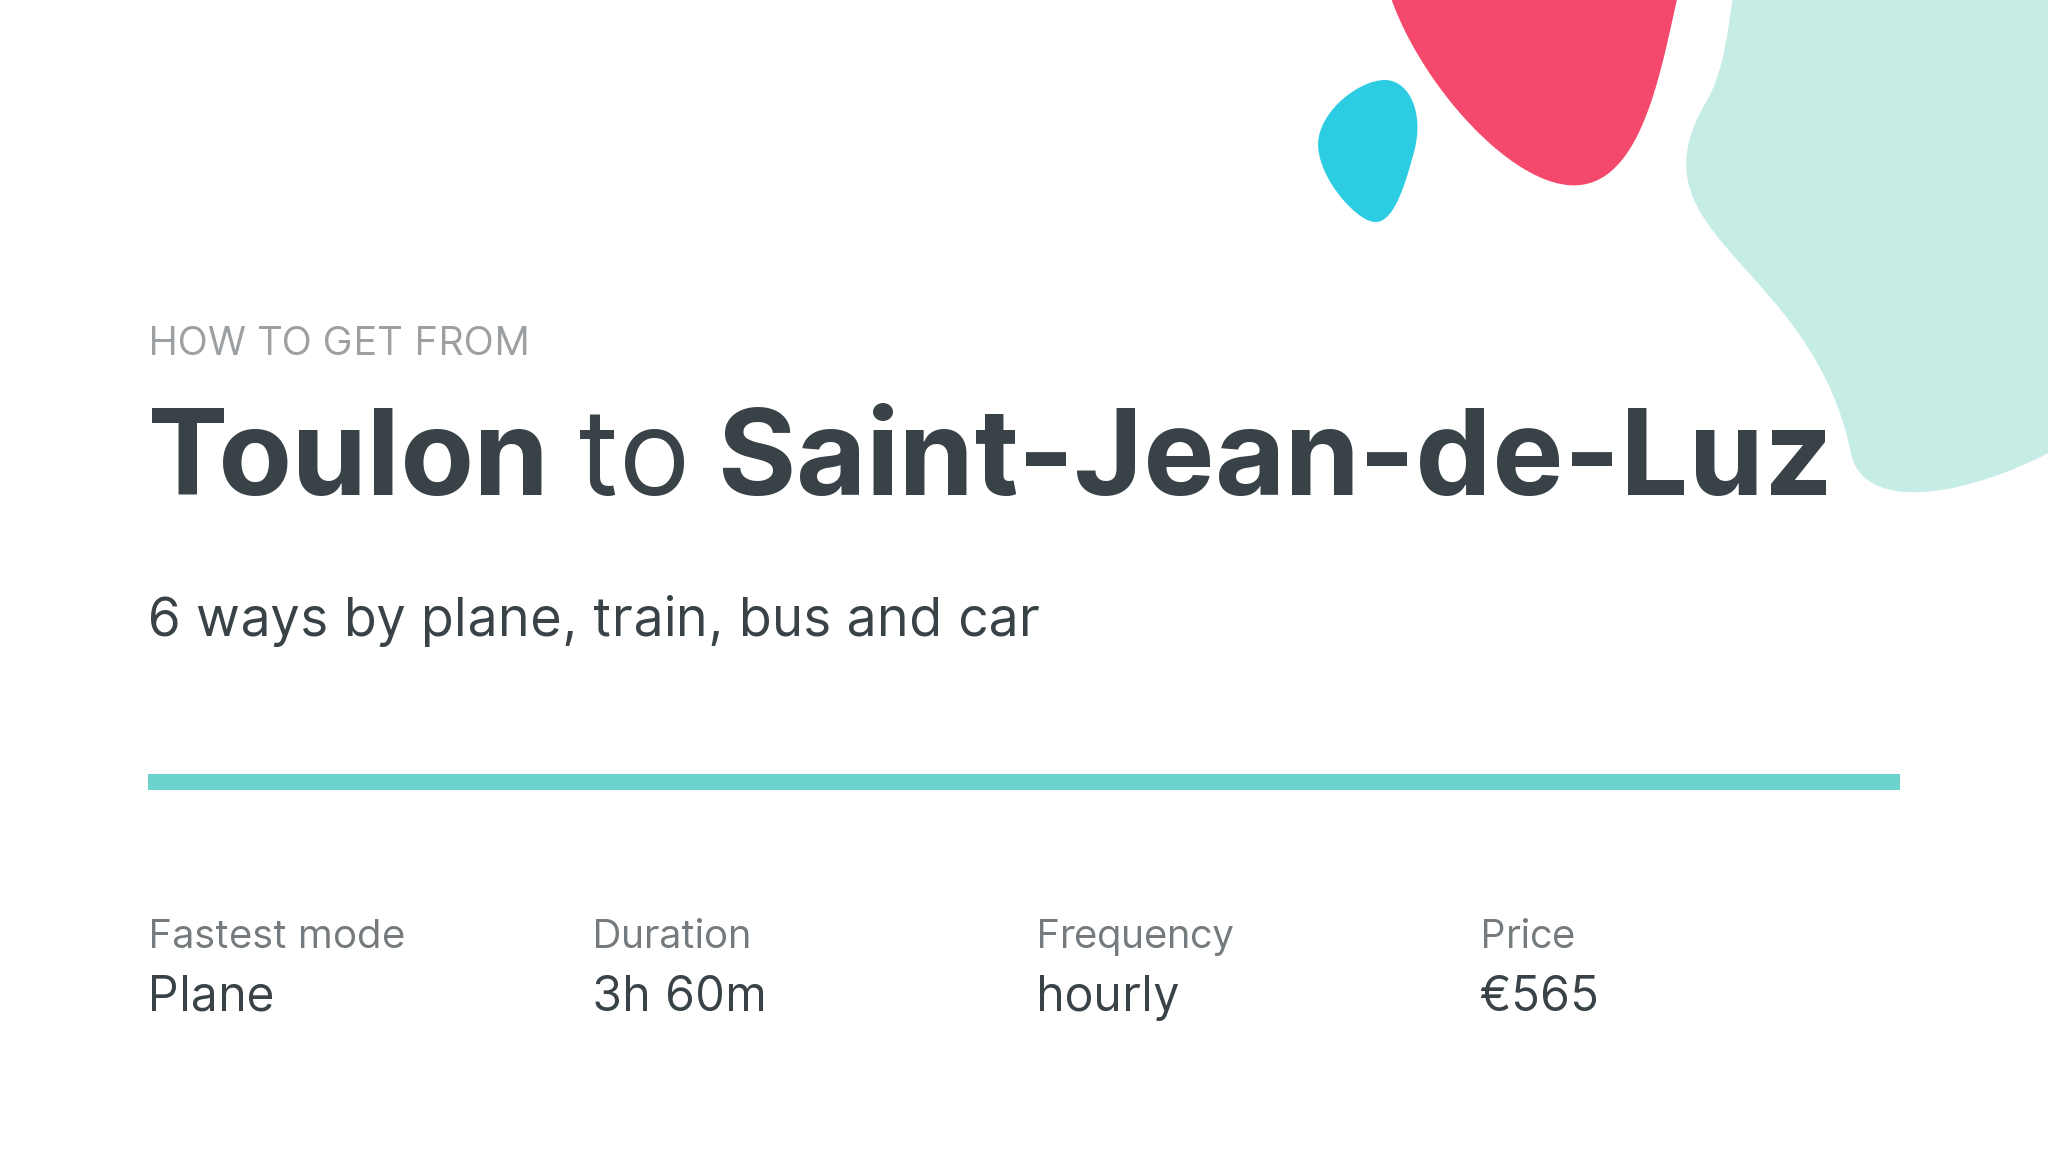 How do I get from Toulon to Saint-Jean-de-Luz